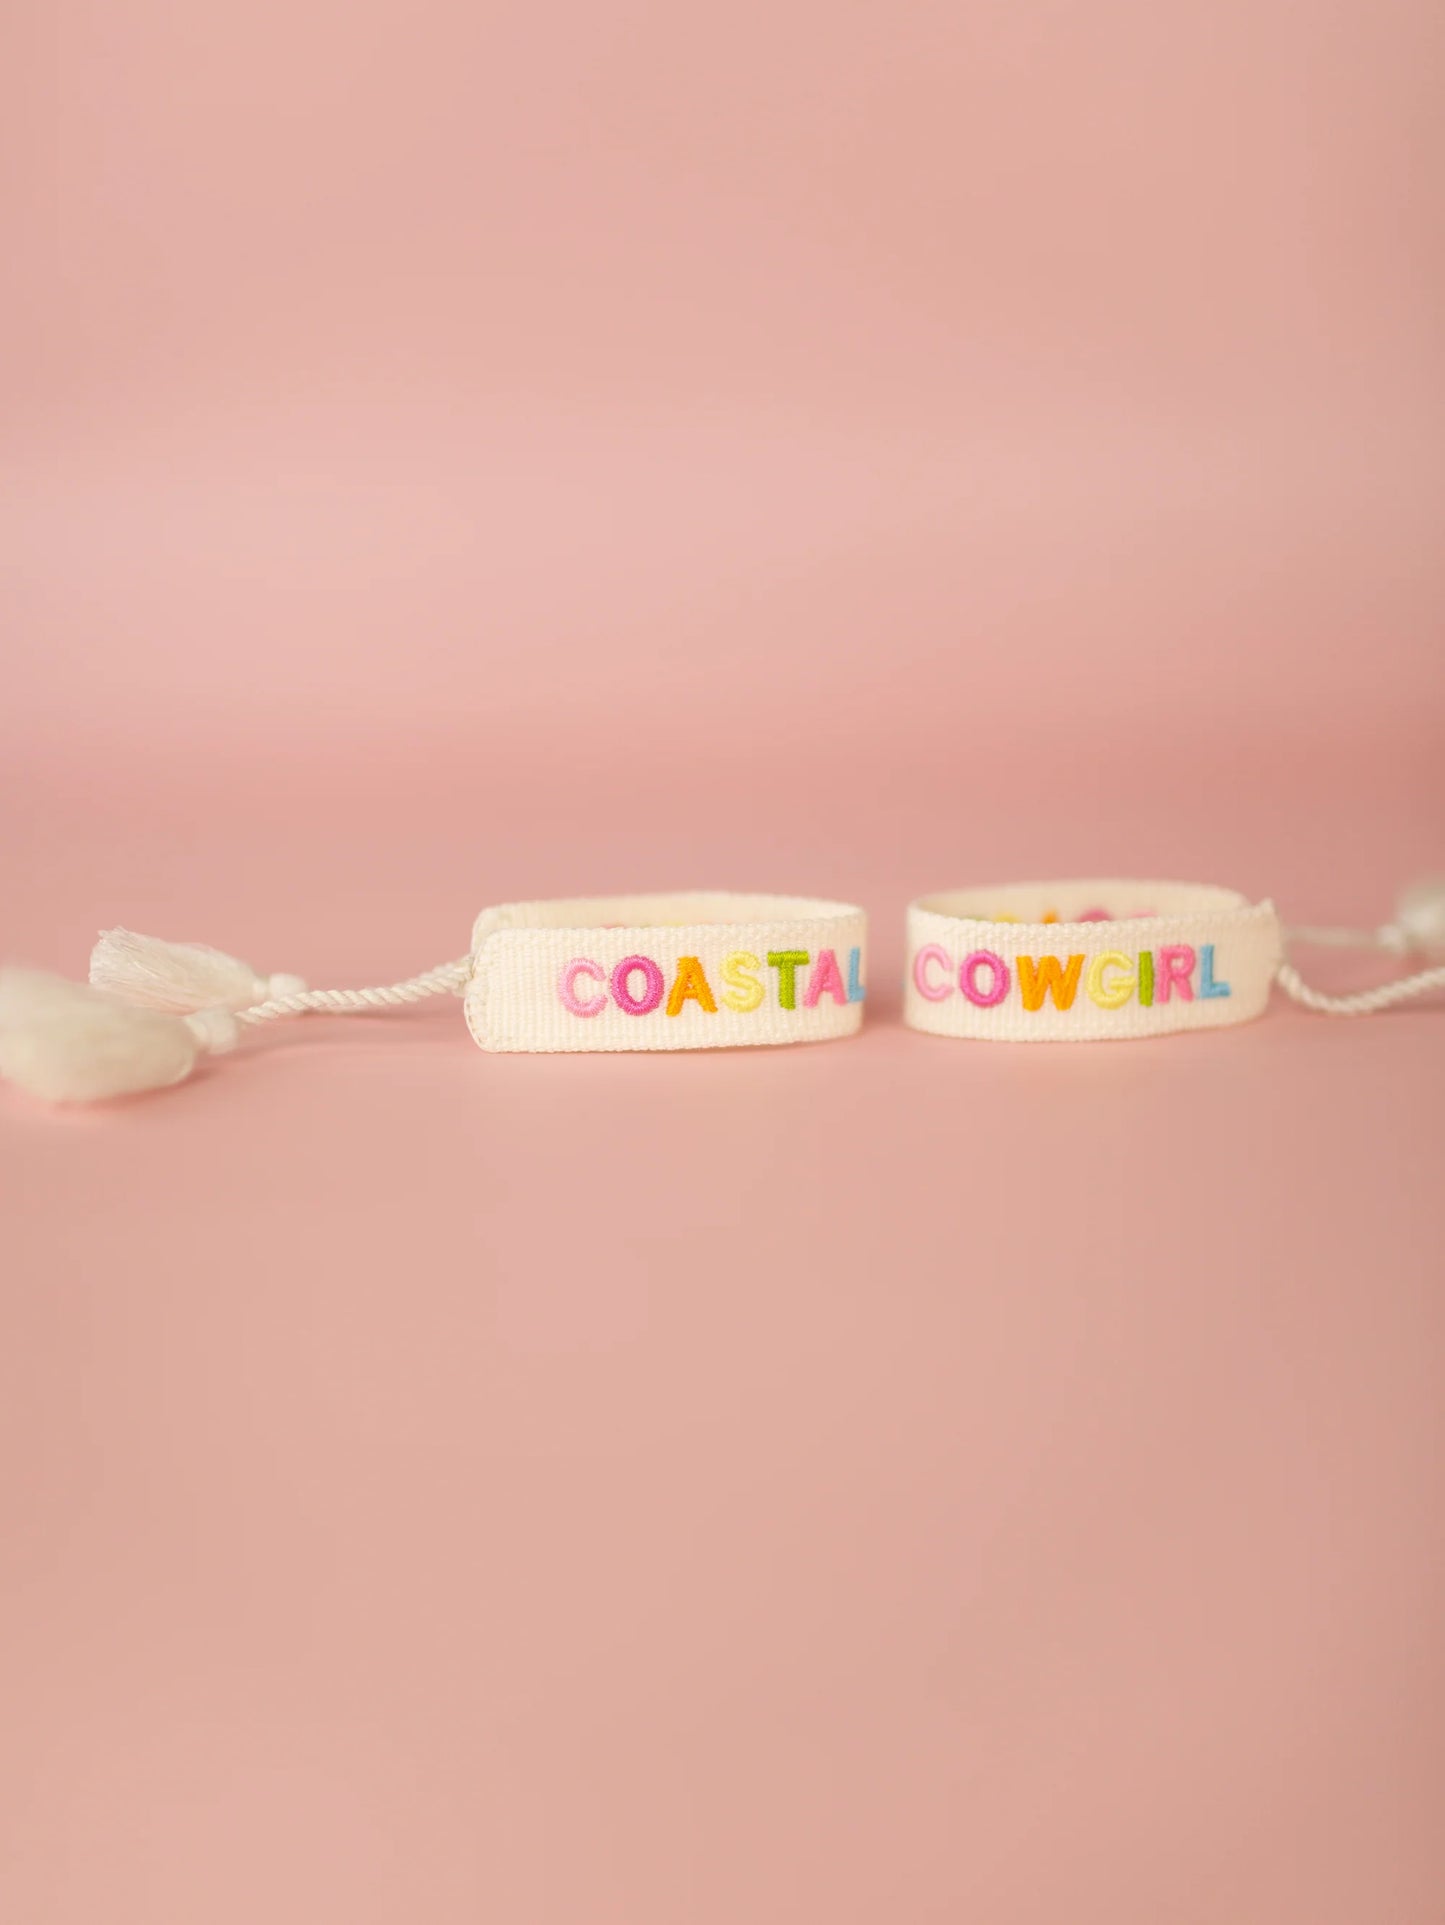 Coastal Cowgirl Bracelet